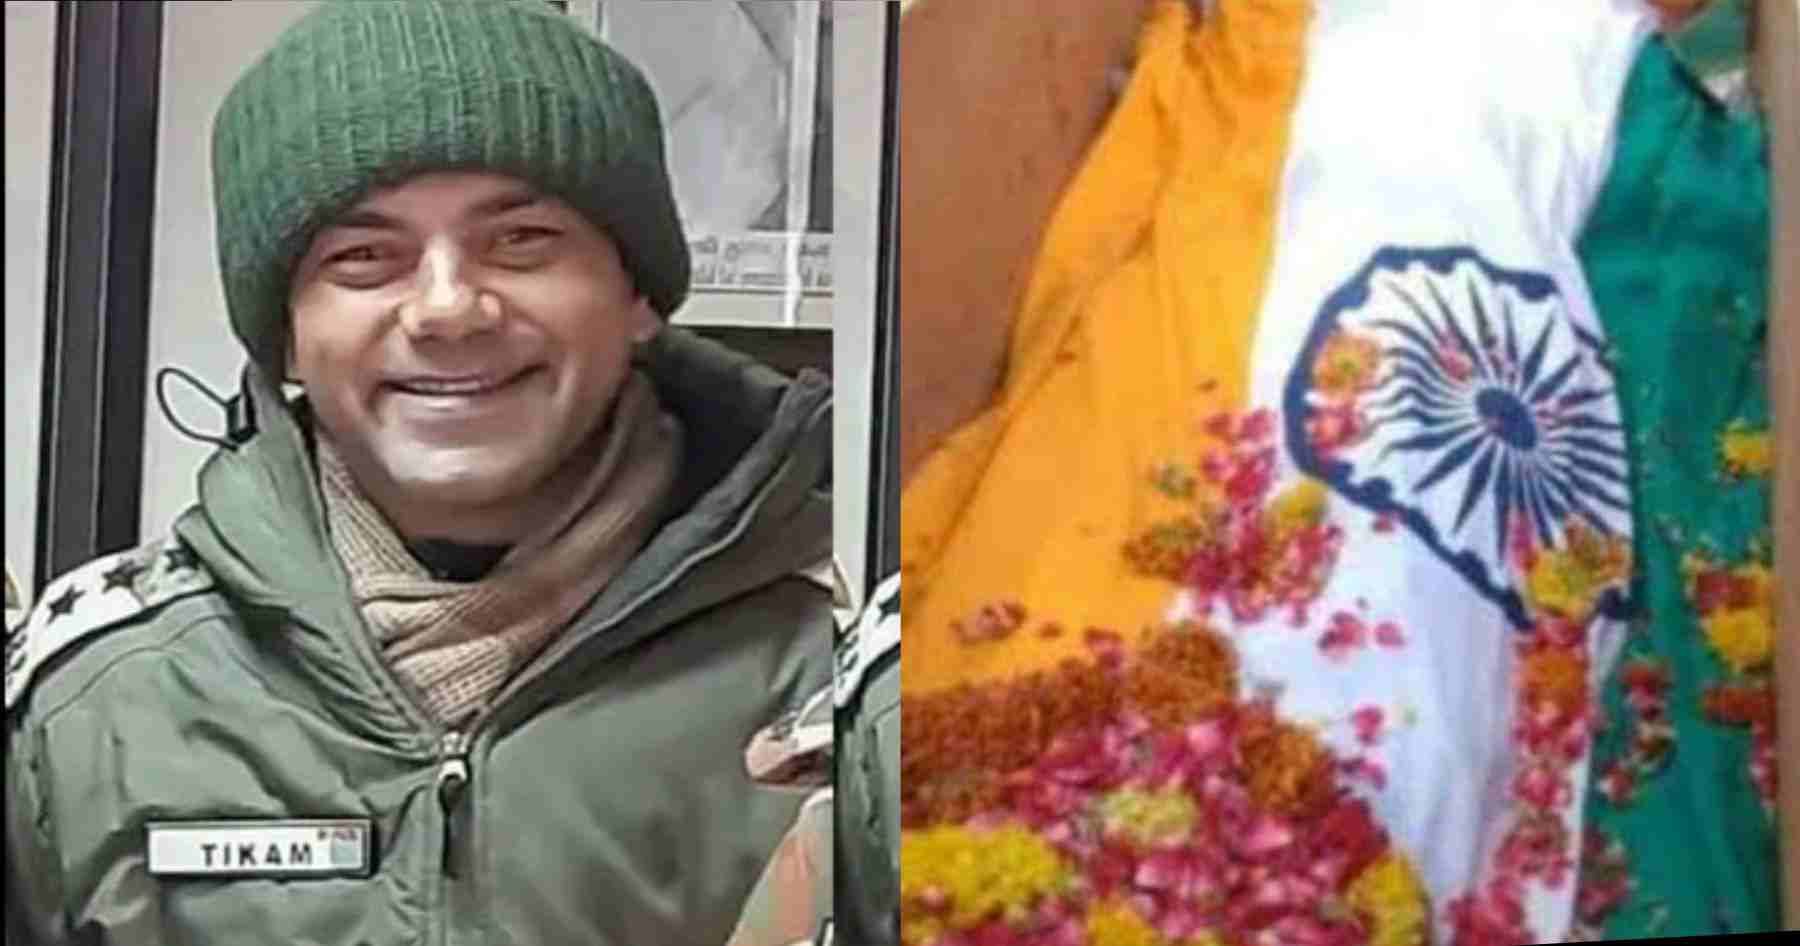 Uttarakhand news: ITBP Jawan Tikam Singh Negi of dehradun was martyred in Ladakh. Tikam Singh Negi uttarakhand